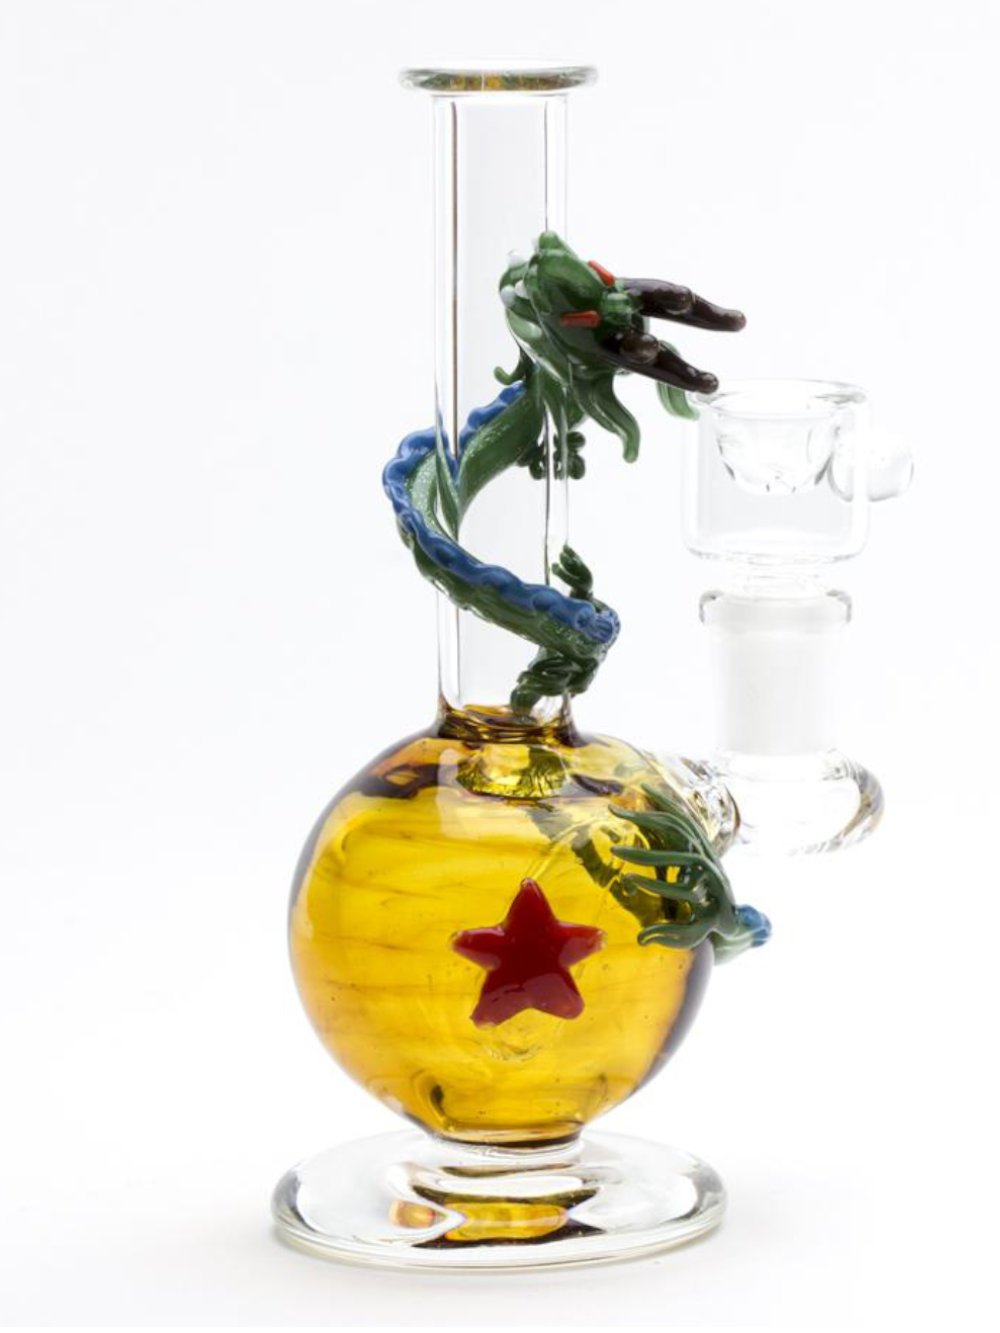 Dragon Sphere Mini Rig Bong Fat Buddha Glass